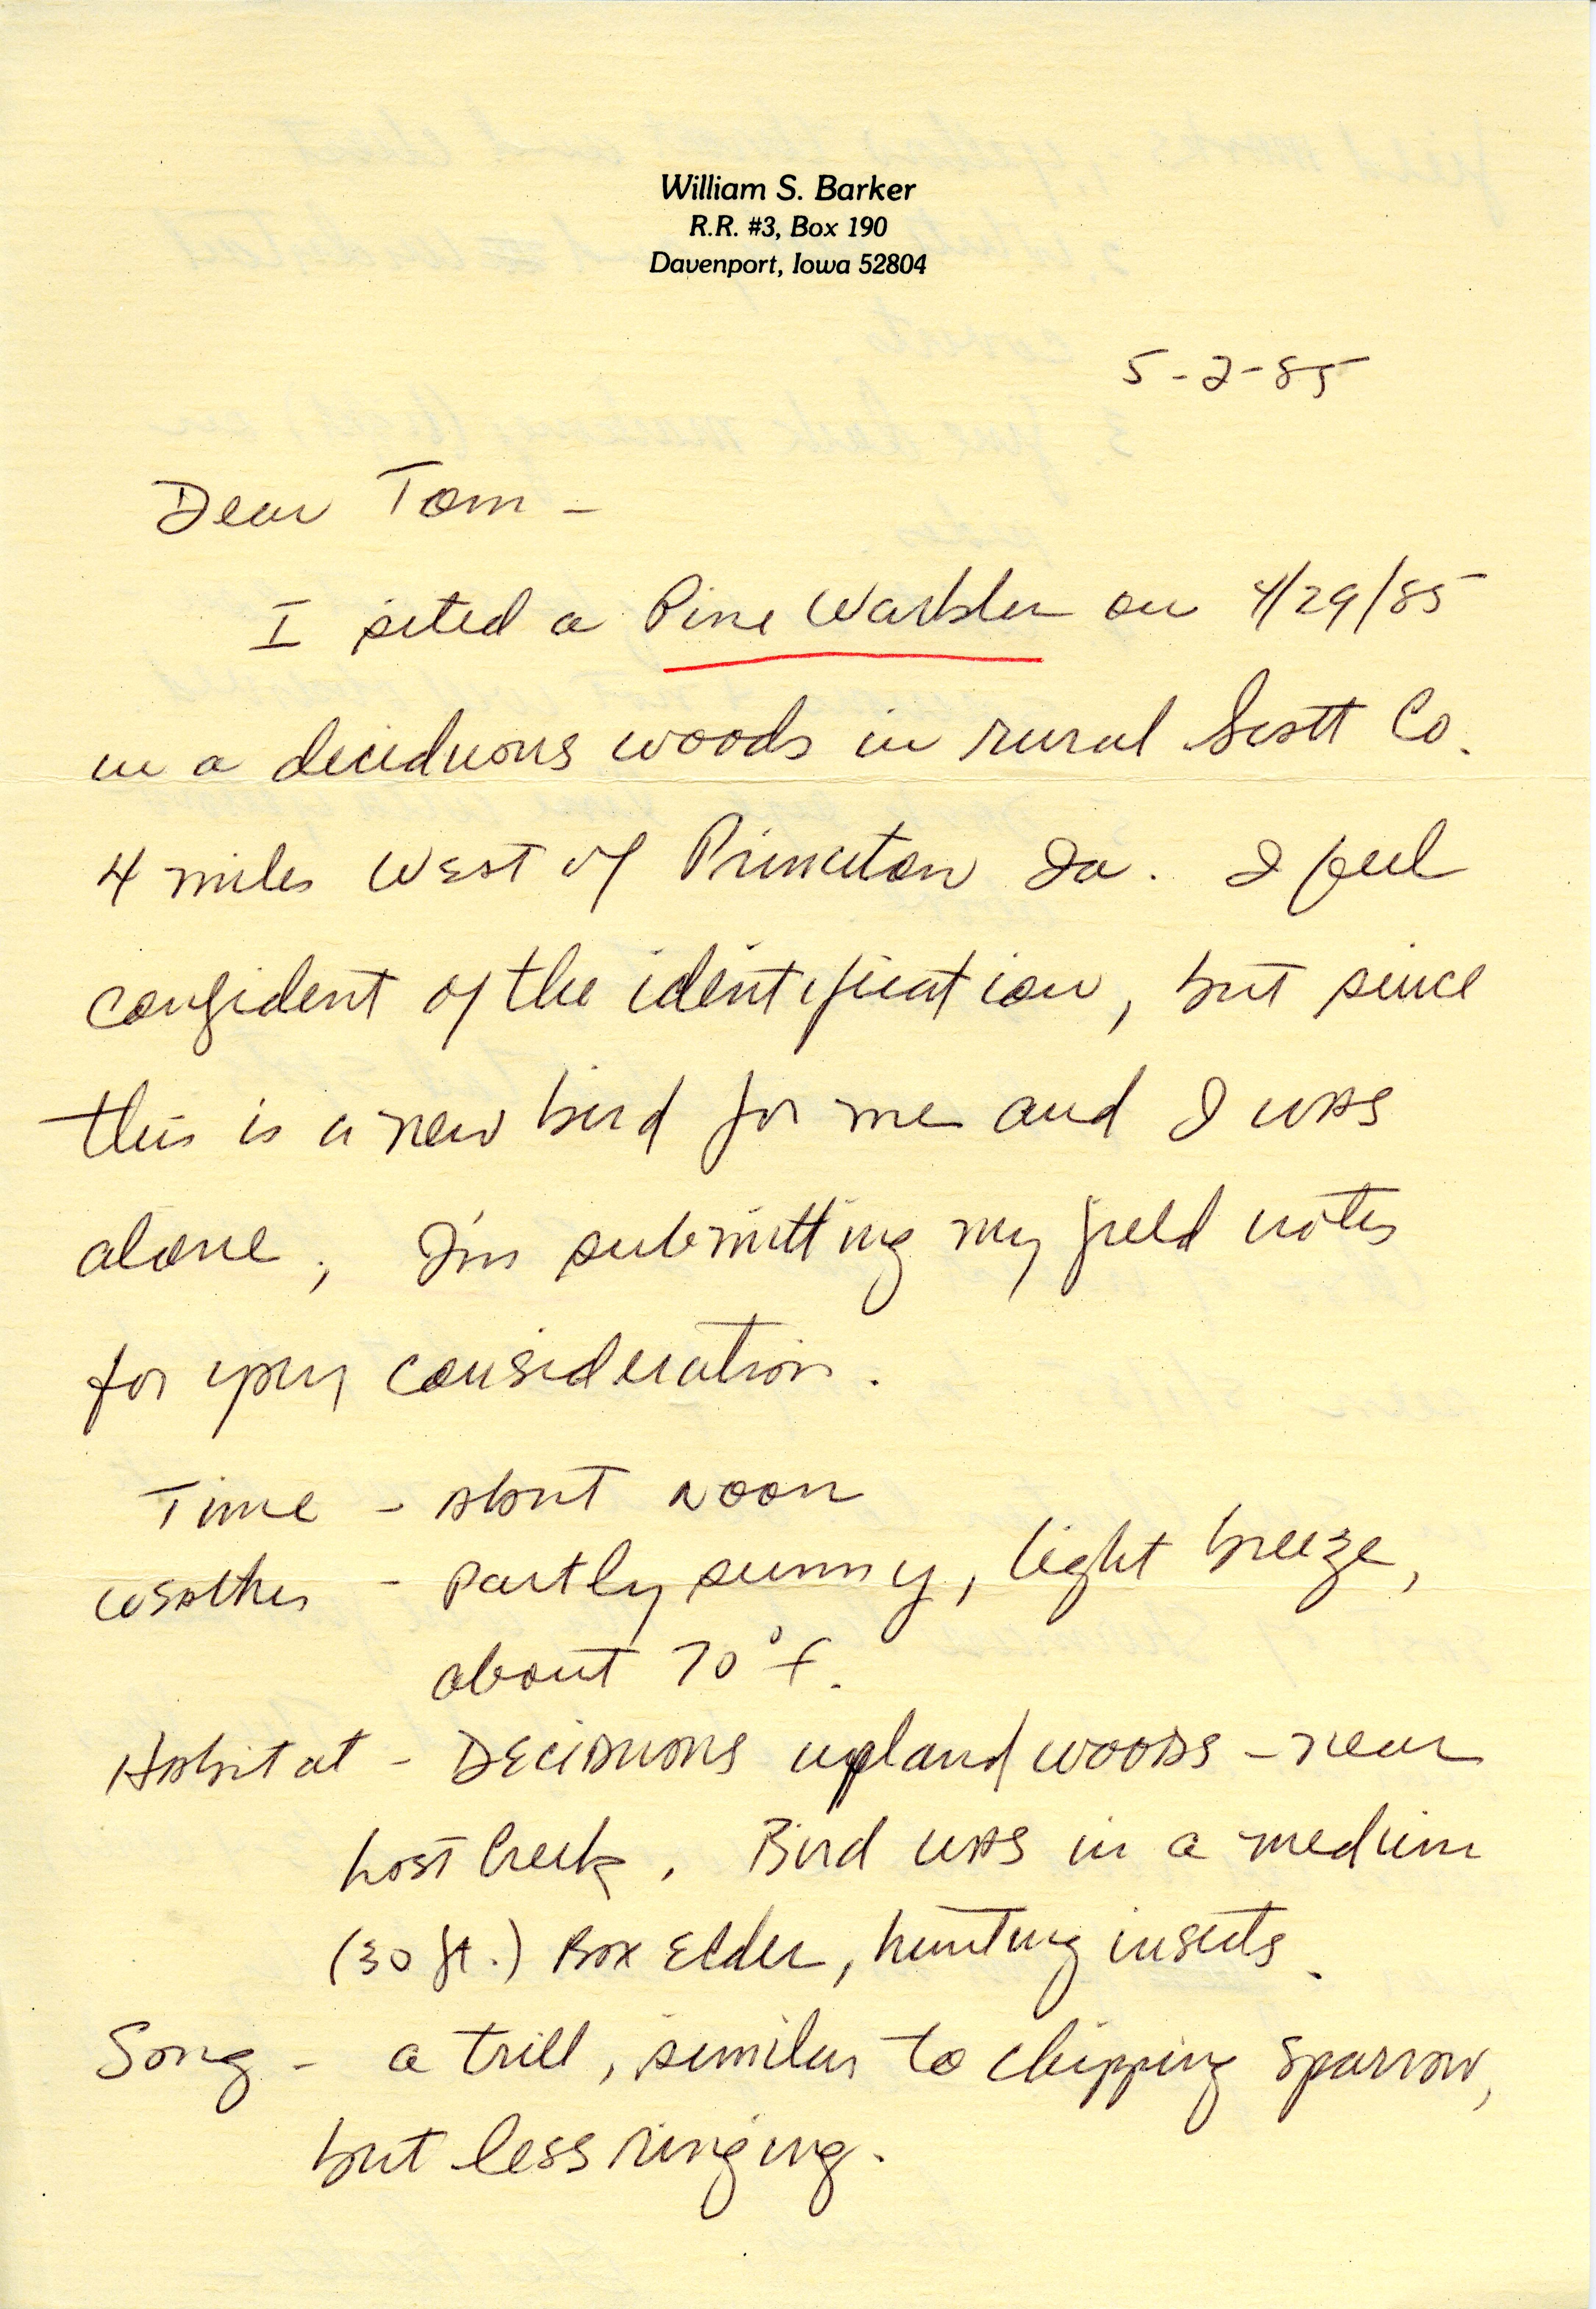 William S. Barker letter to Thomas H. Kent regarding bird sightings, May 2, 1985